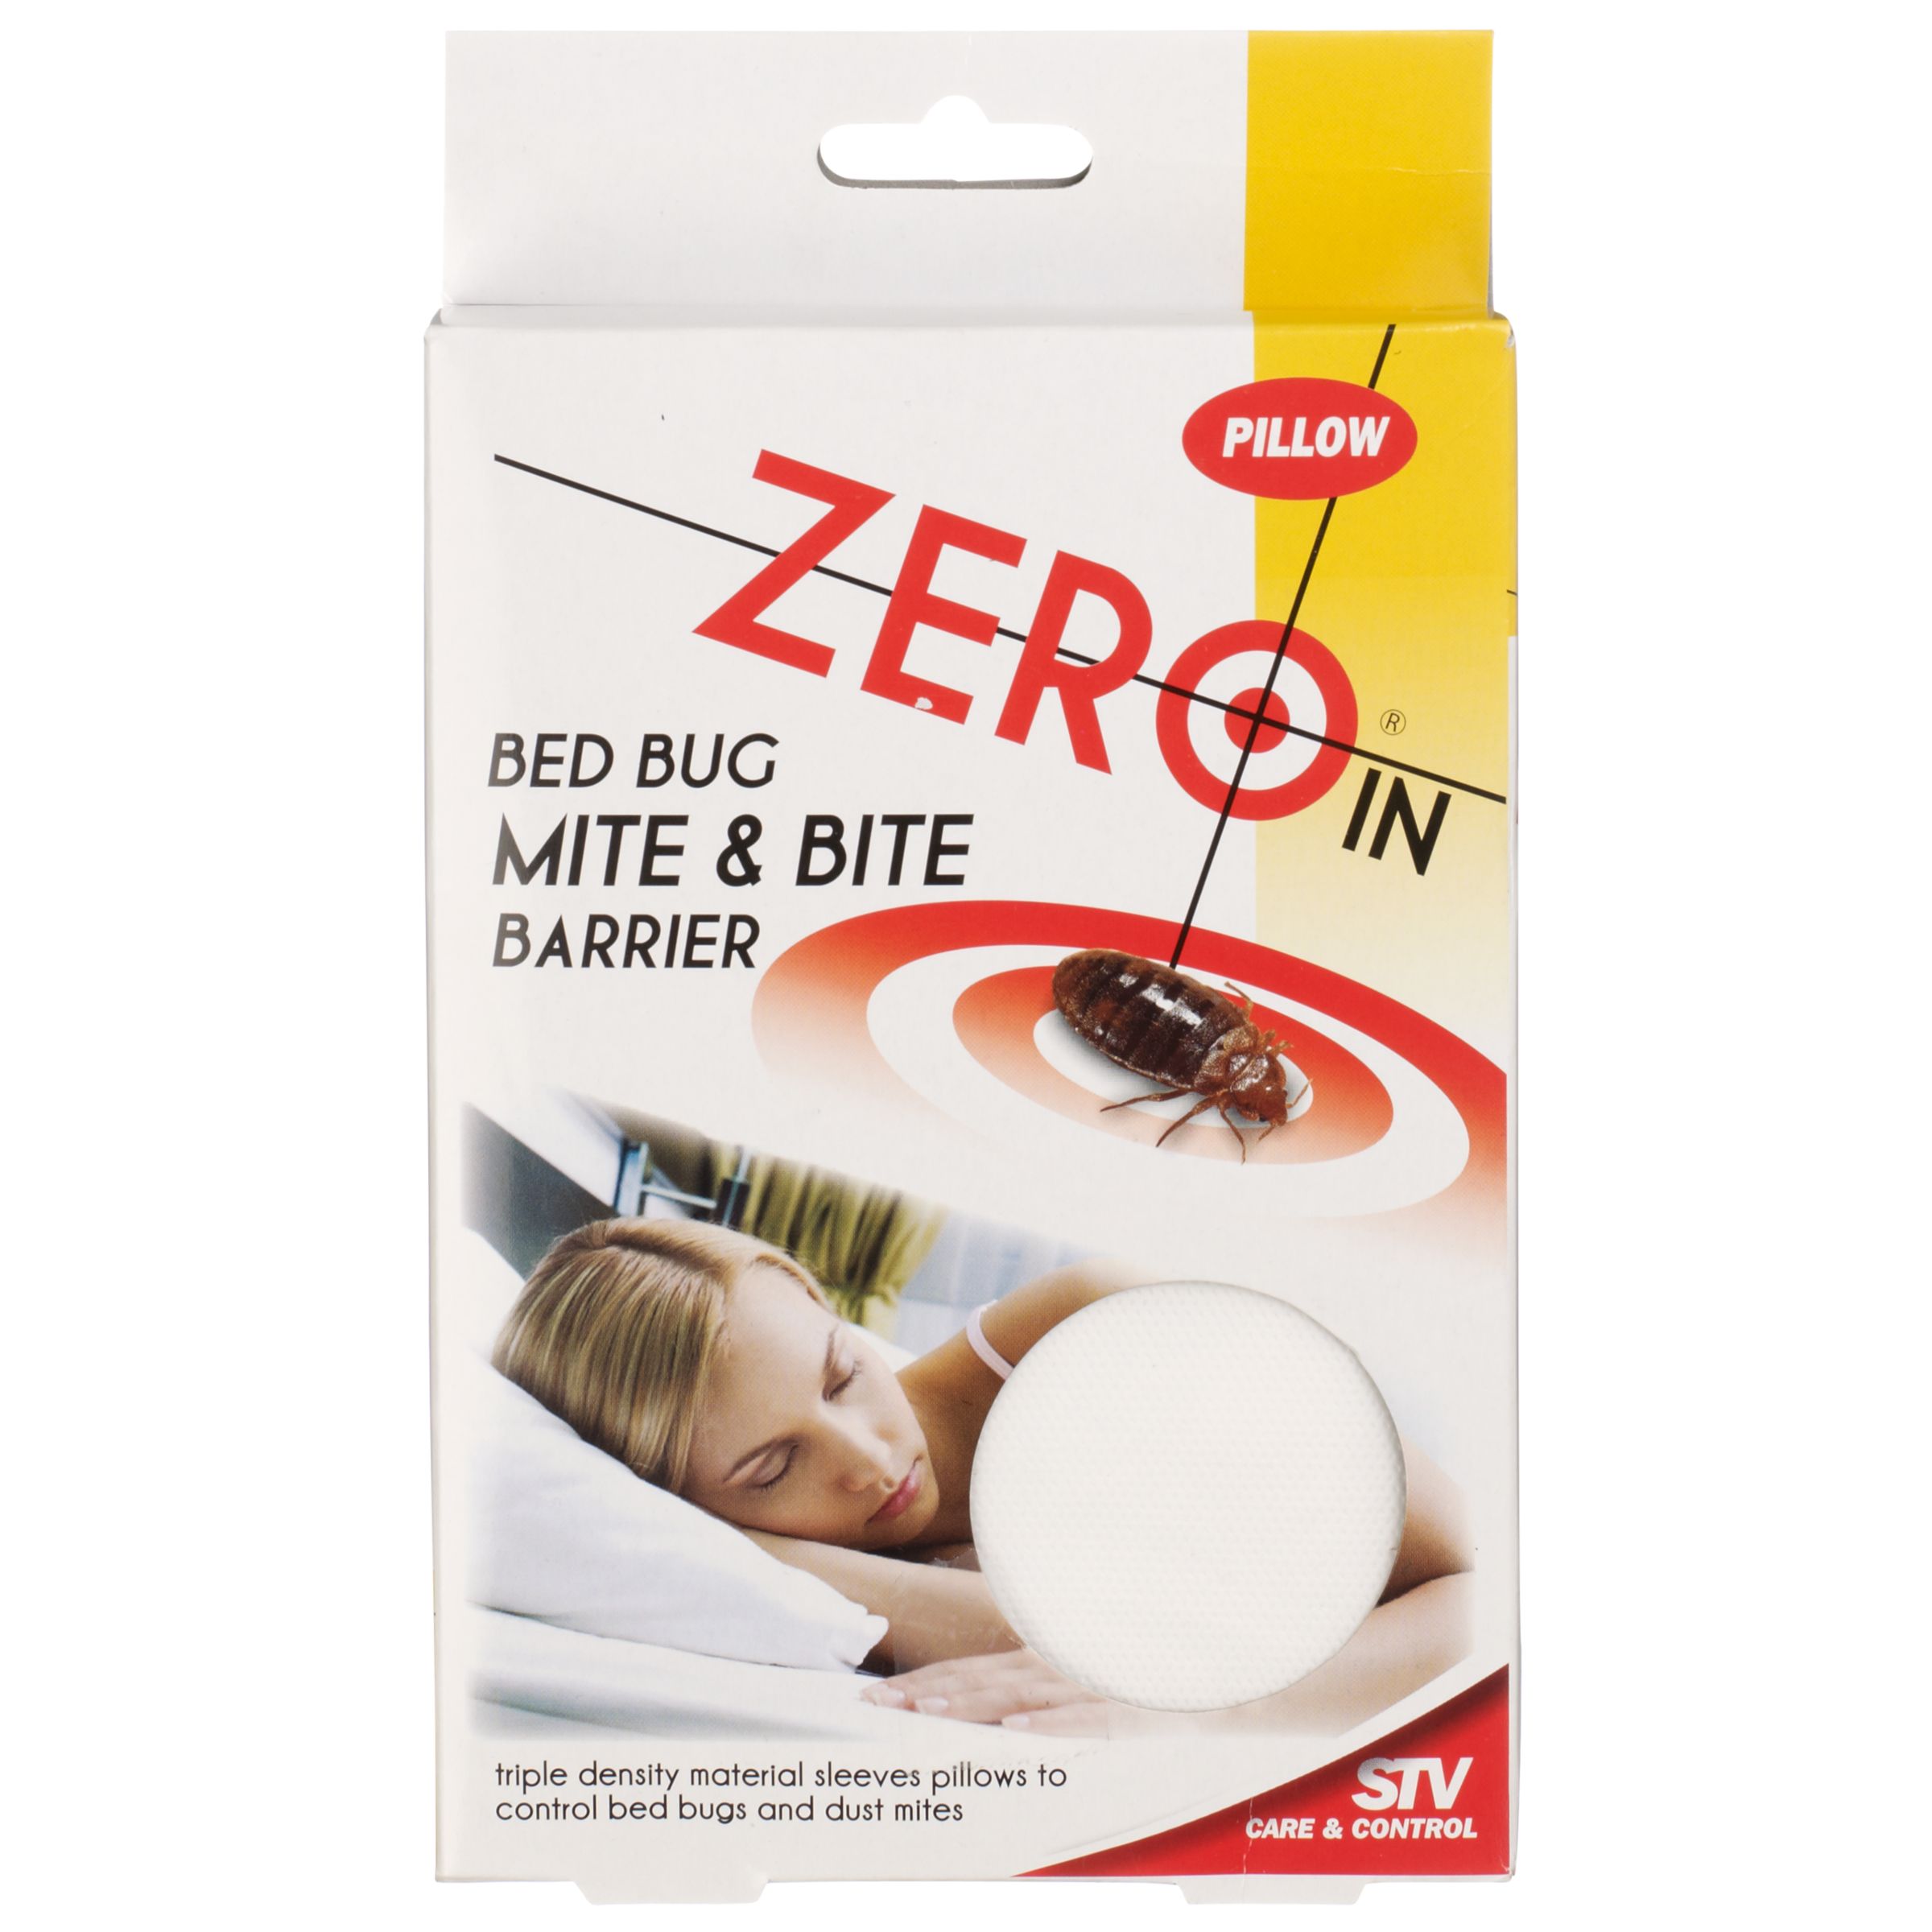 ZeroIn Bed Bug / Mite Pillow Case Barrier